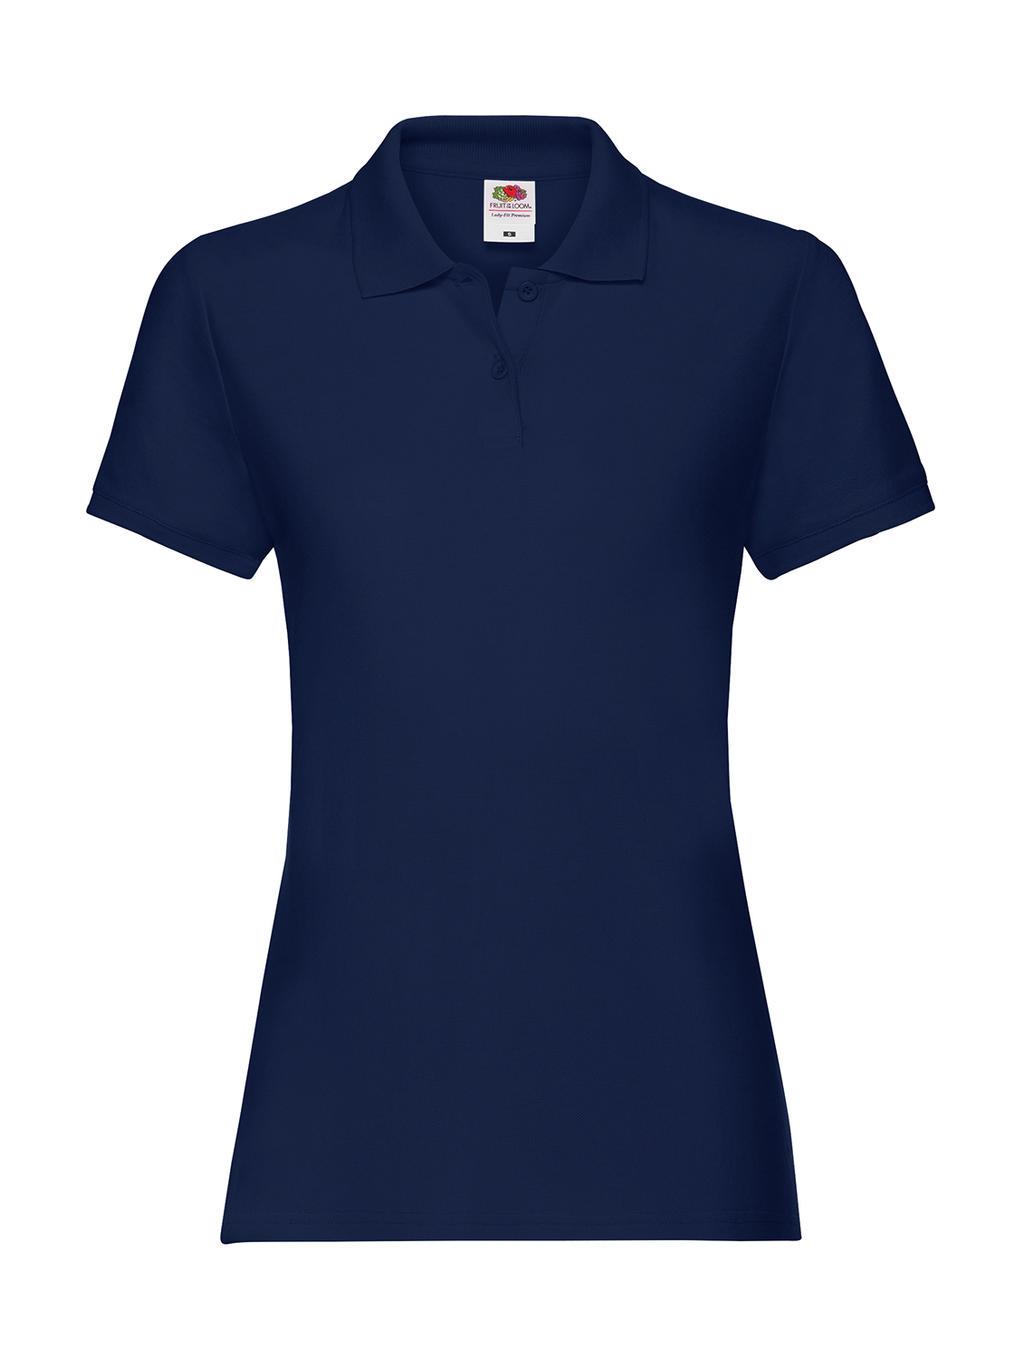  Ladies Premium Polo in Farbe Navy